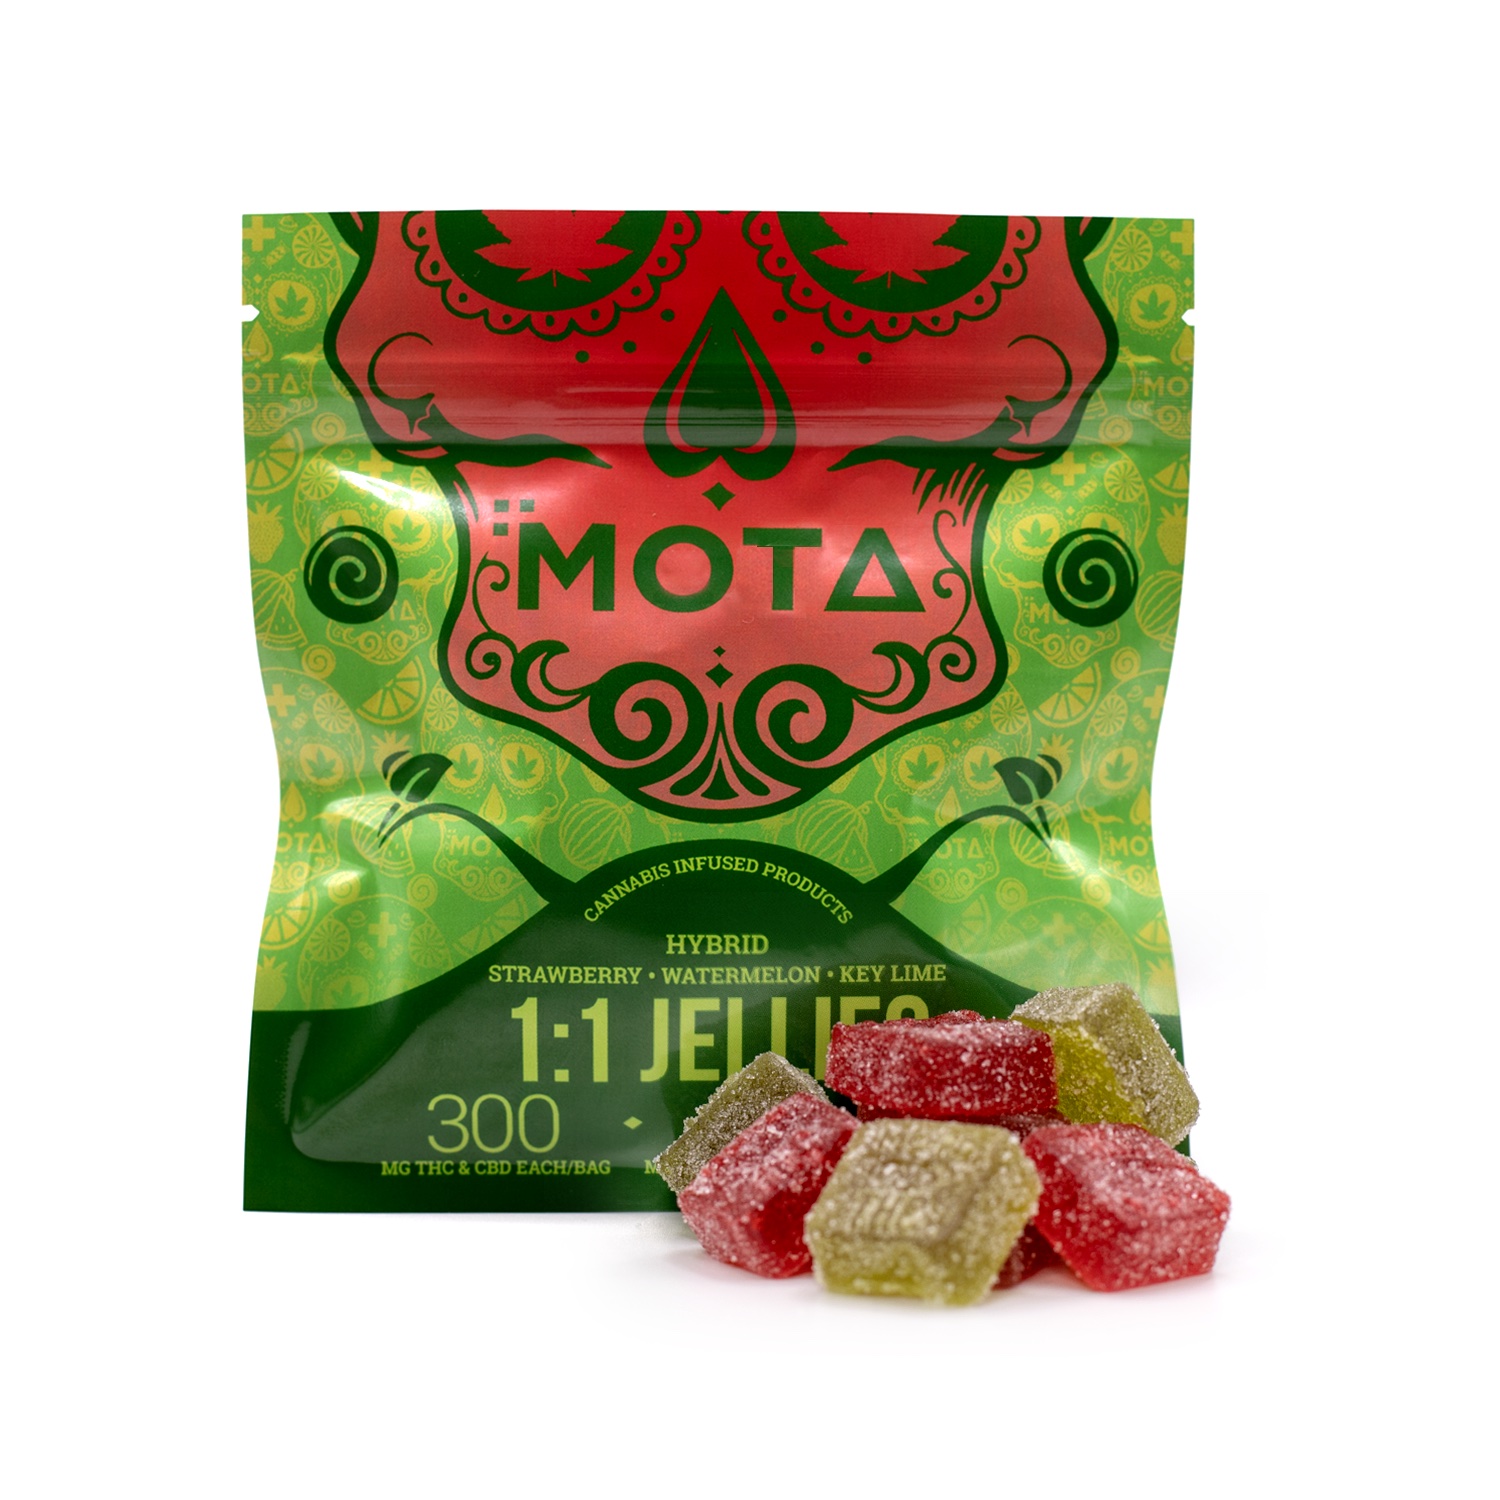 1:1 Jellies – Strawberry, Watermelon and Key Lime – MOTA